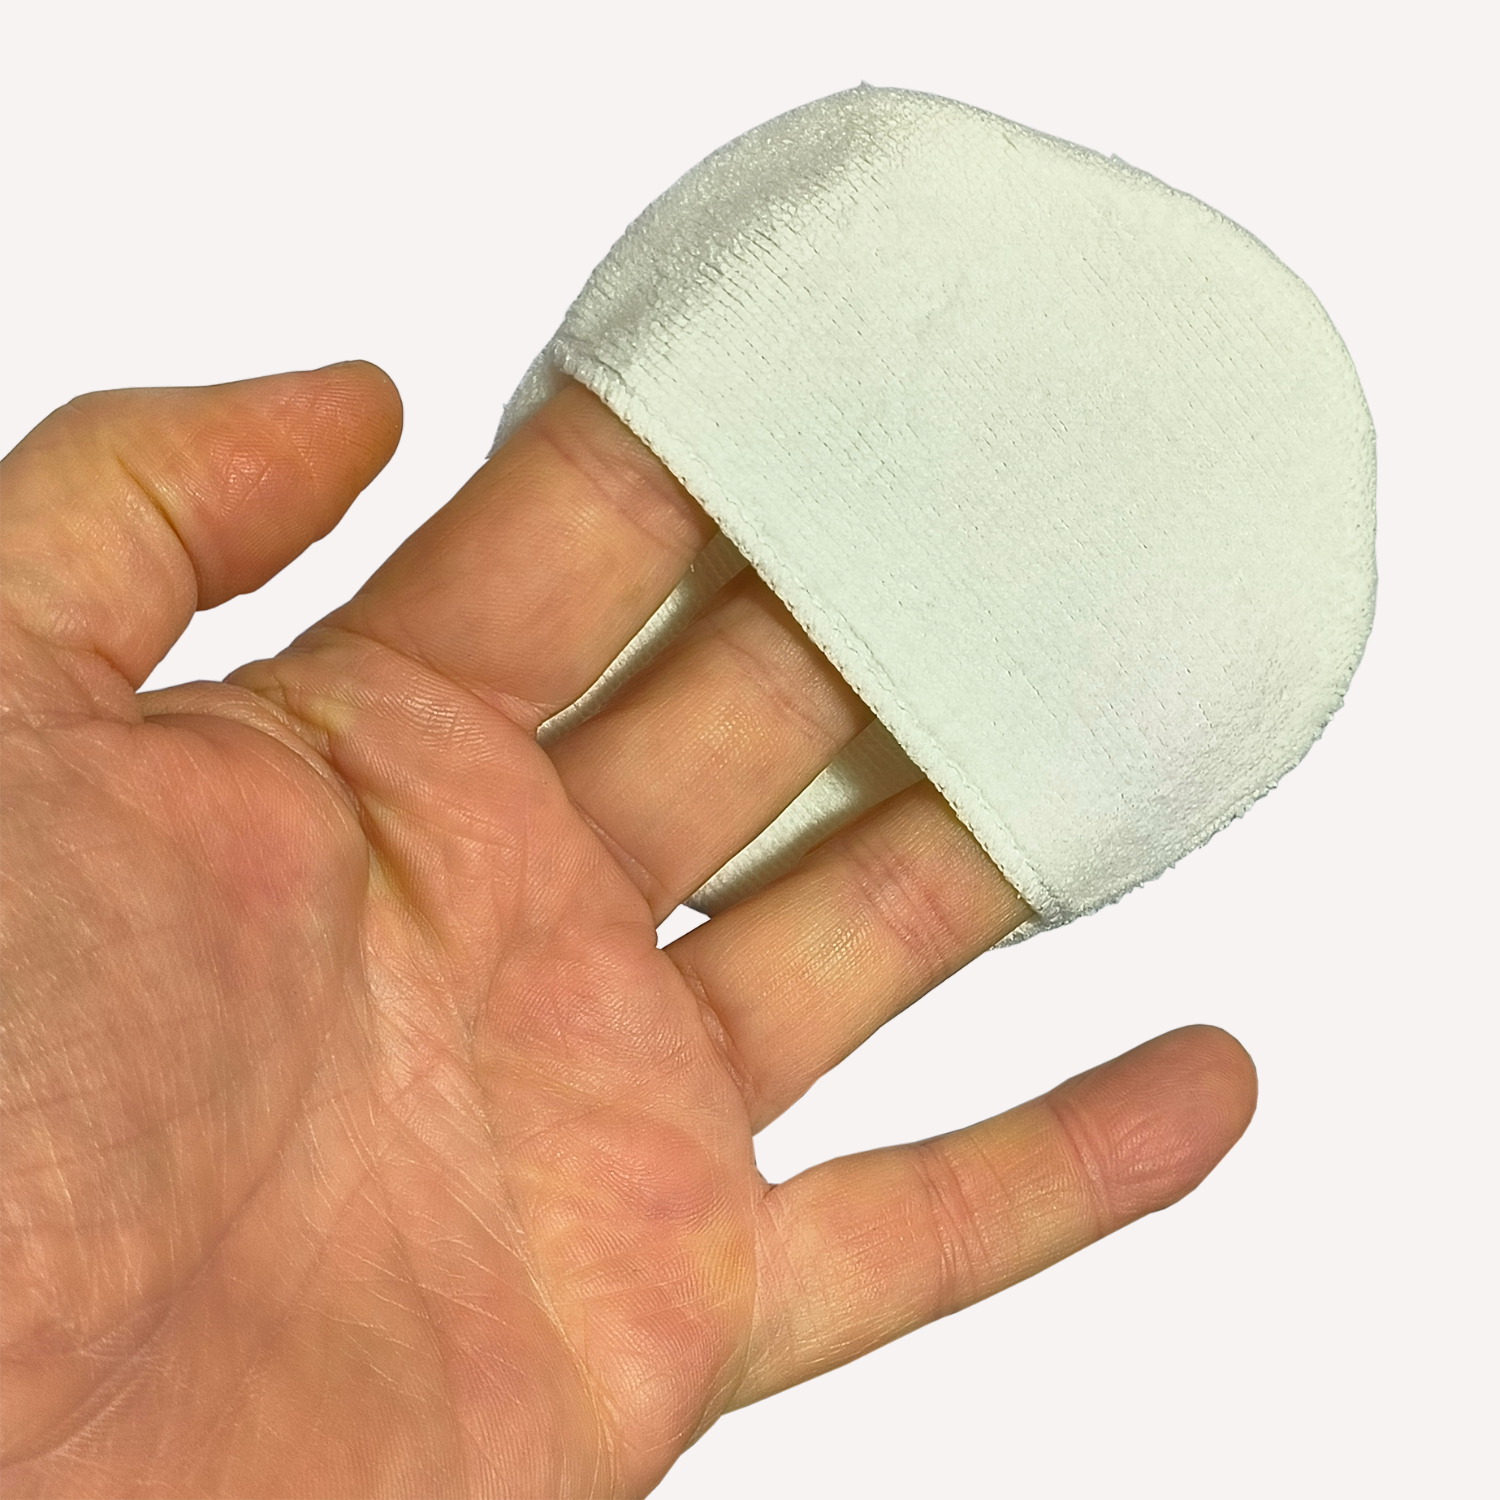 Hand holding white microfibre applicator pad.